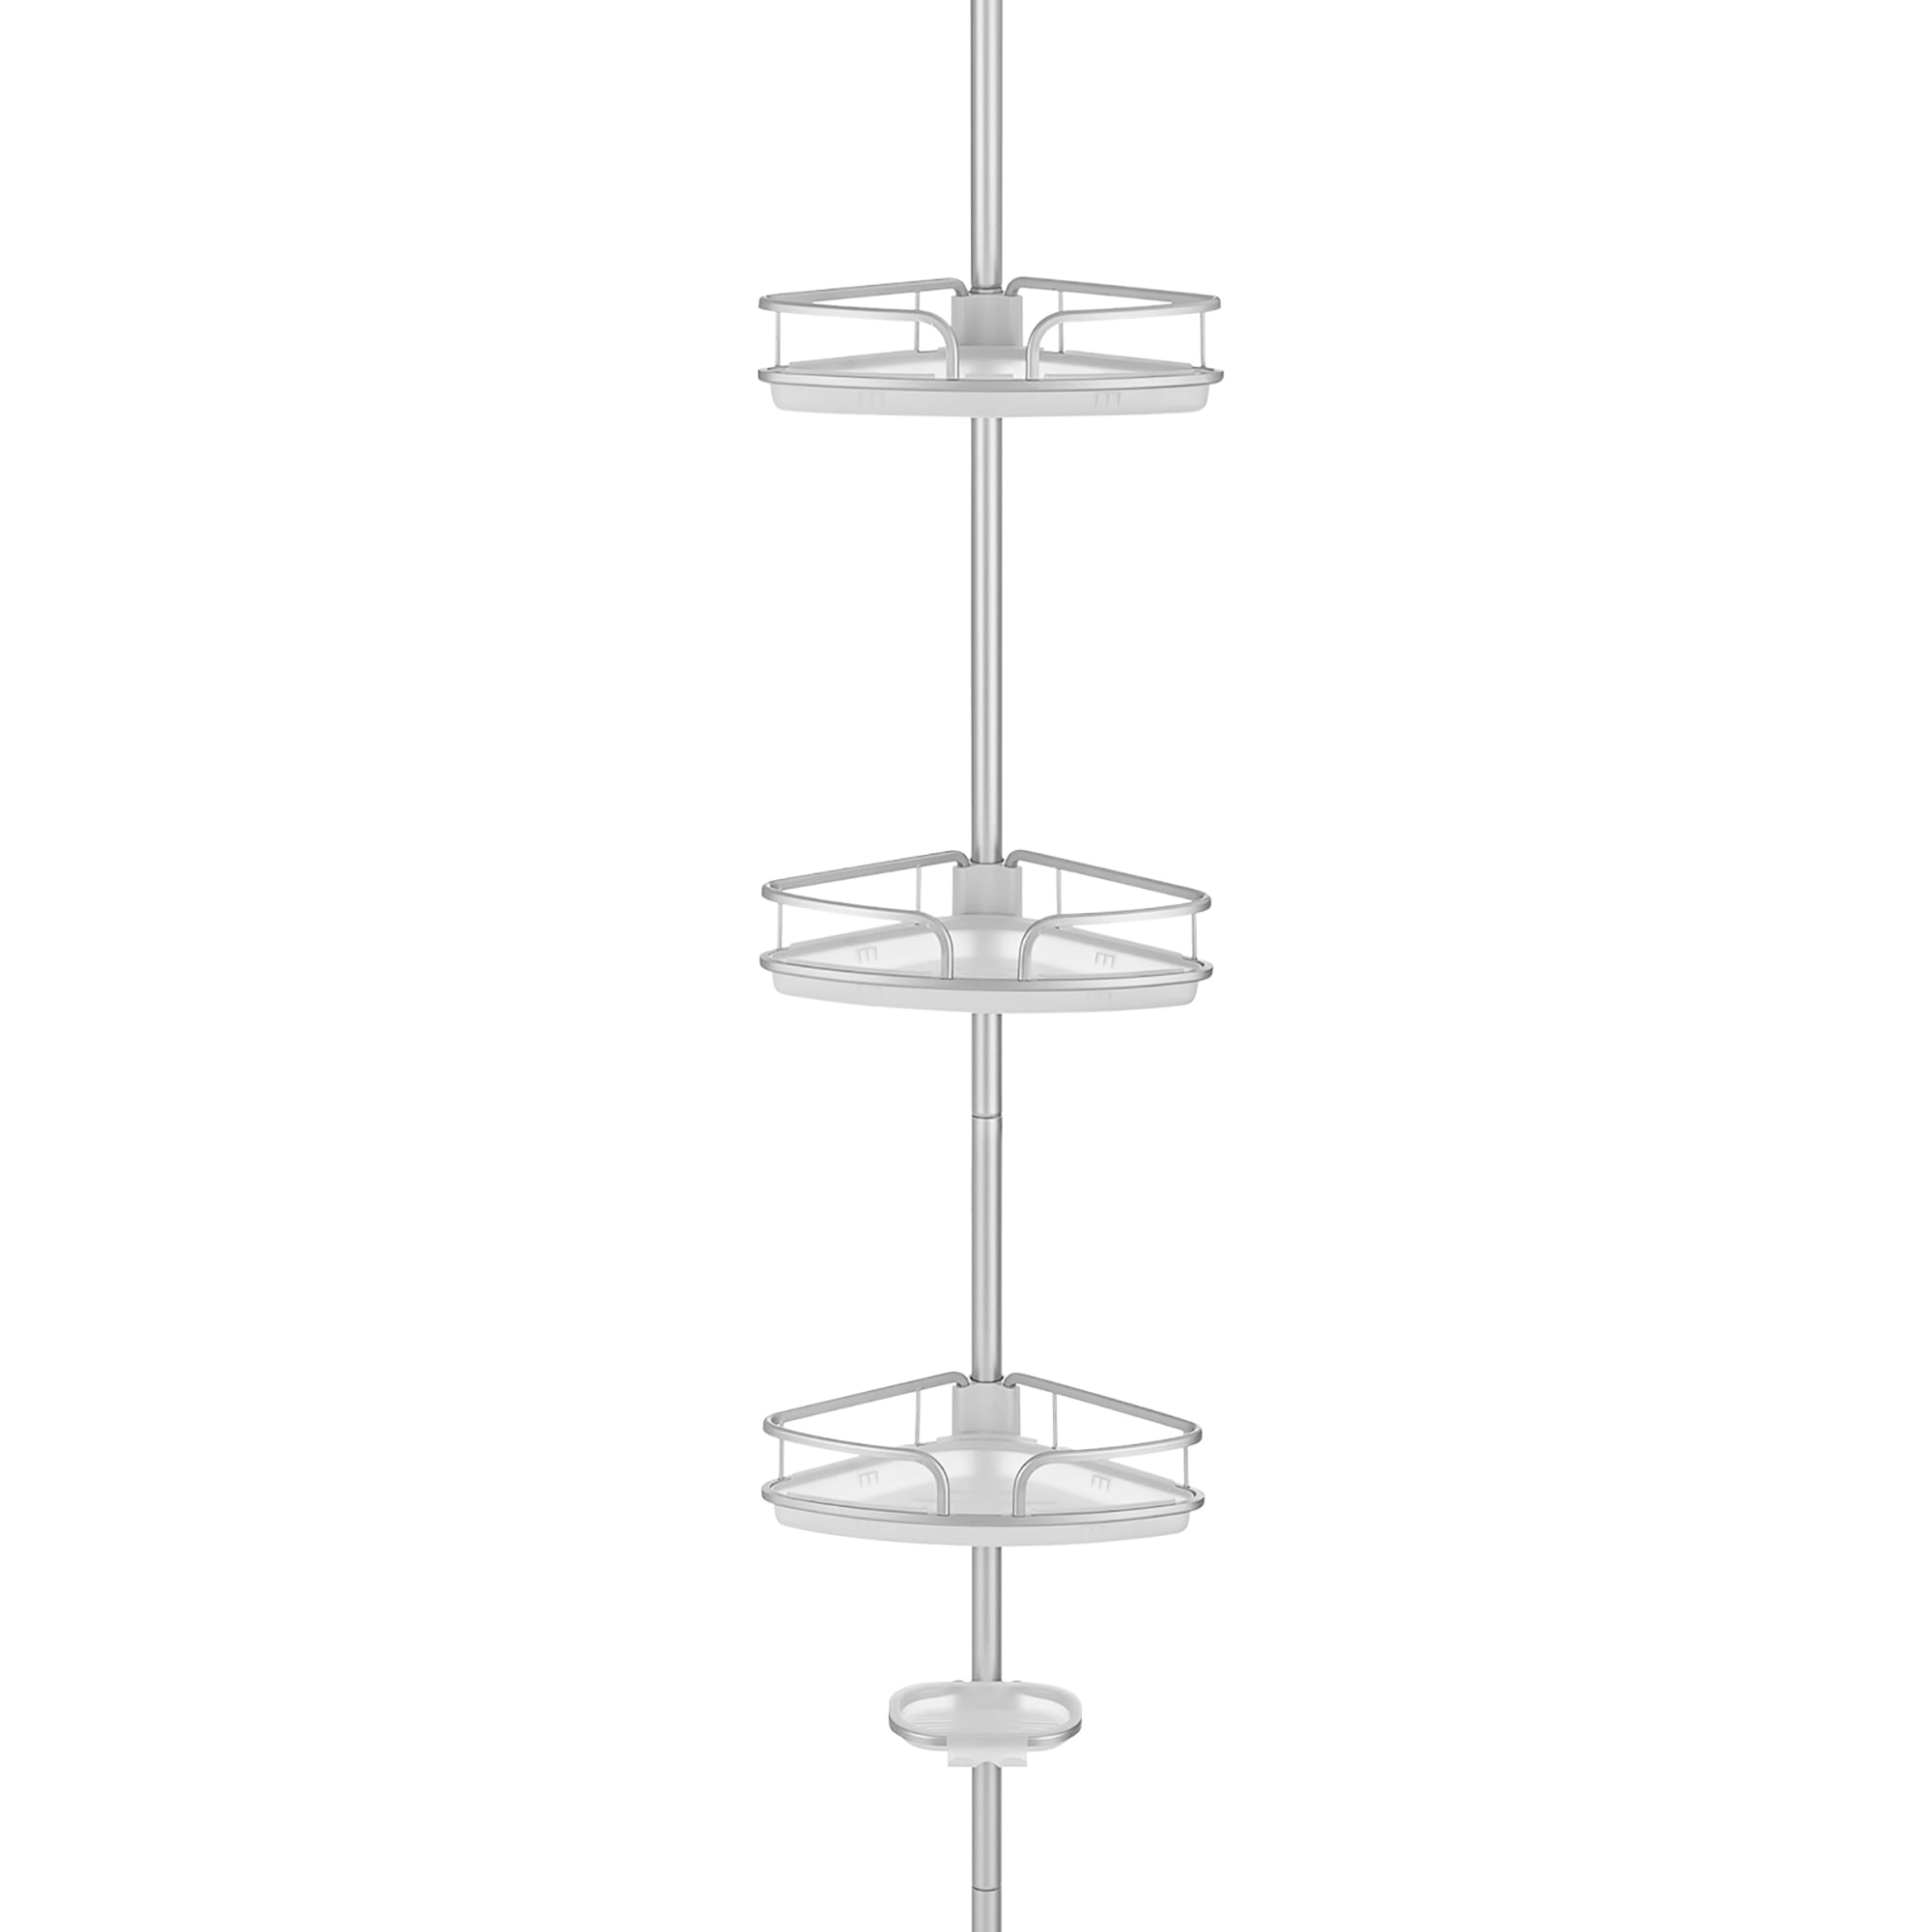 4-Way Adjustable Corner Pole Shower Caddy, Brushed Nickel - Stainless